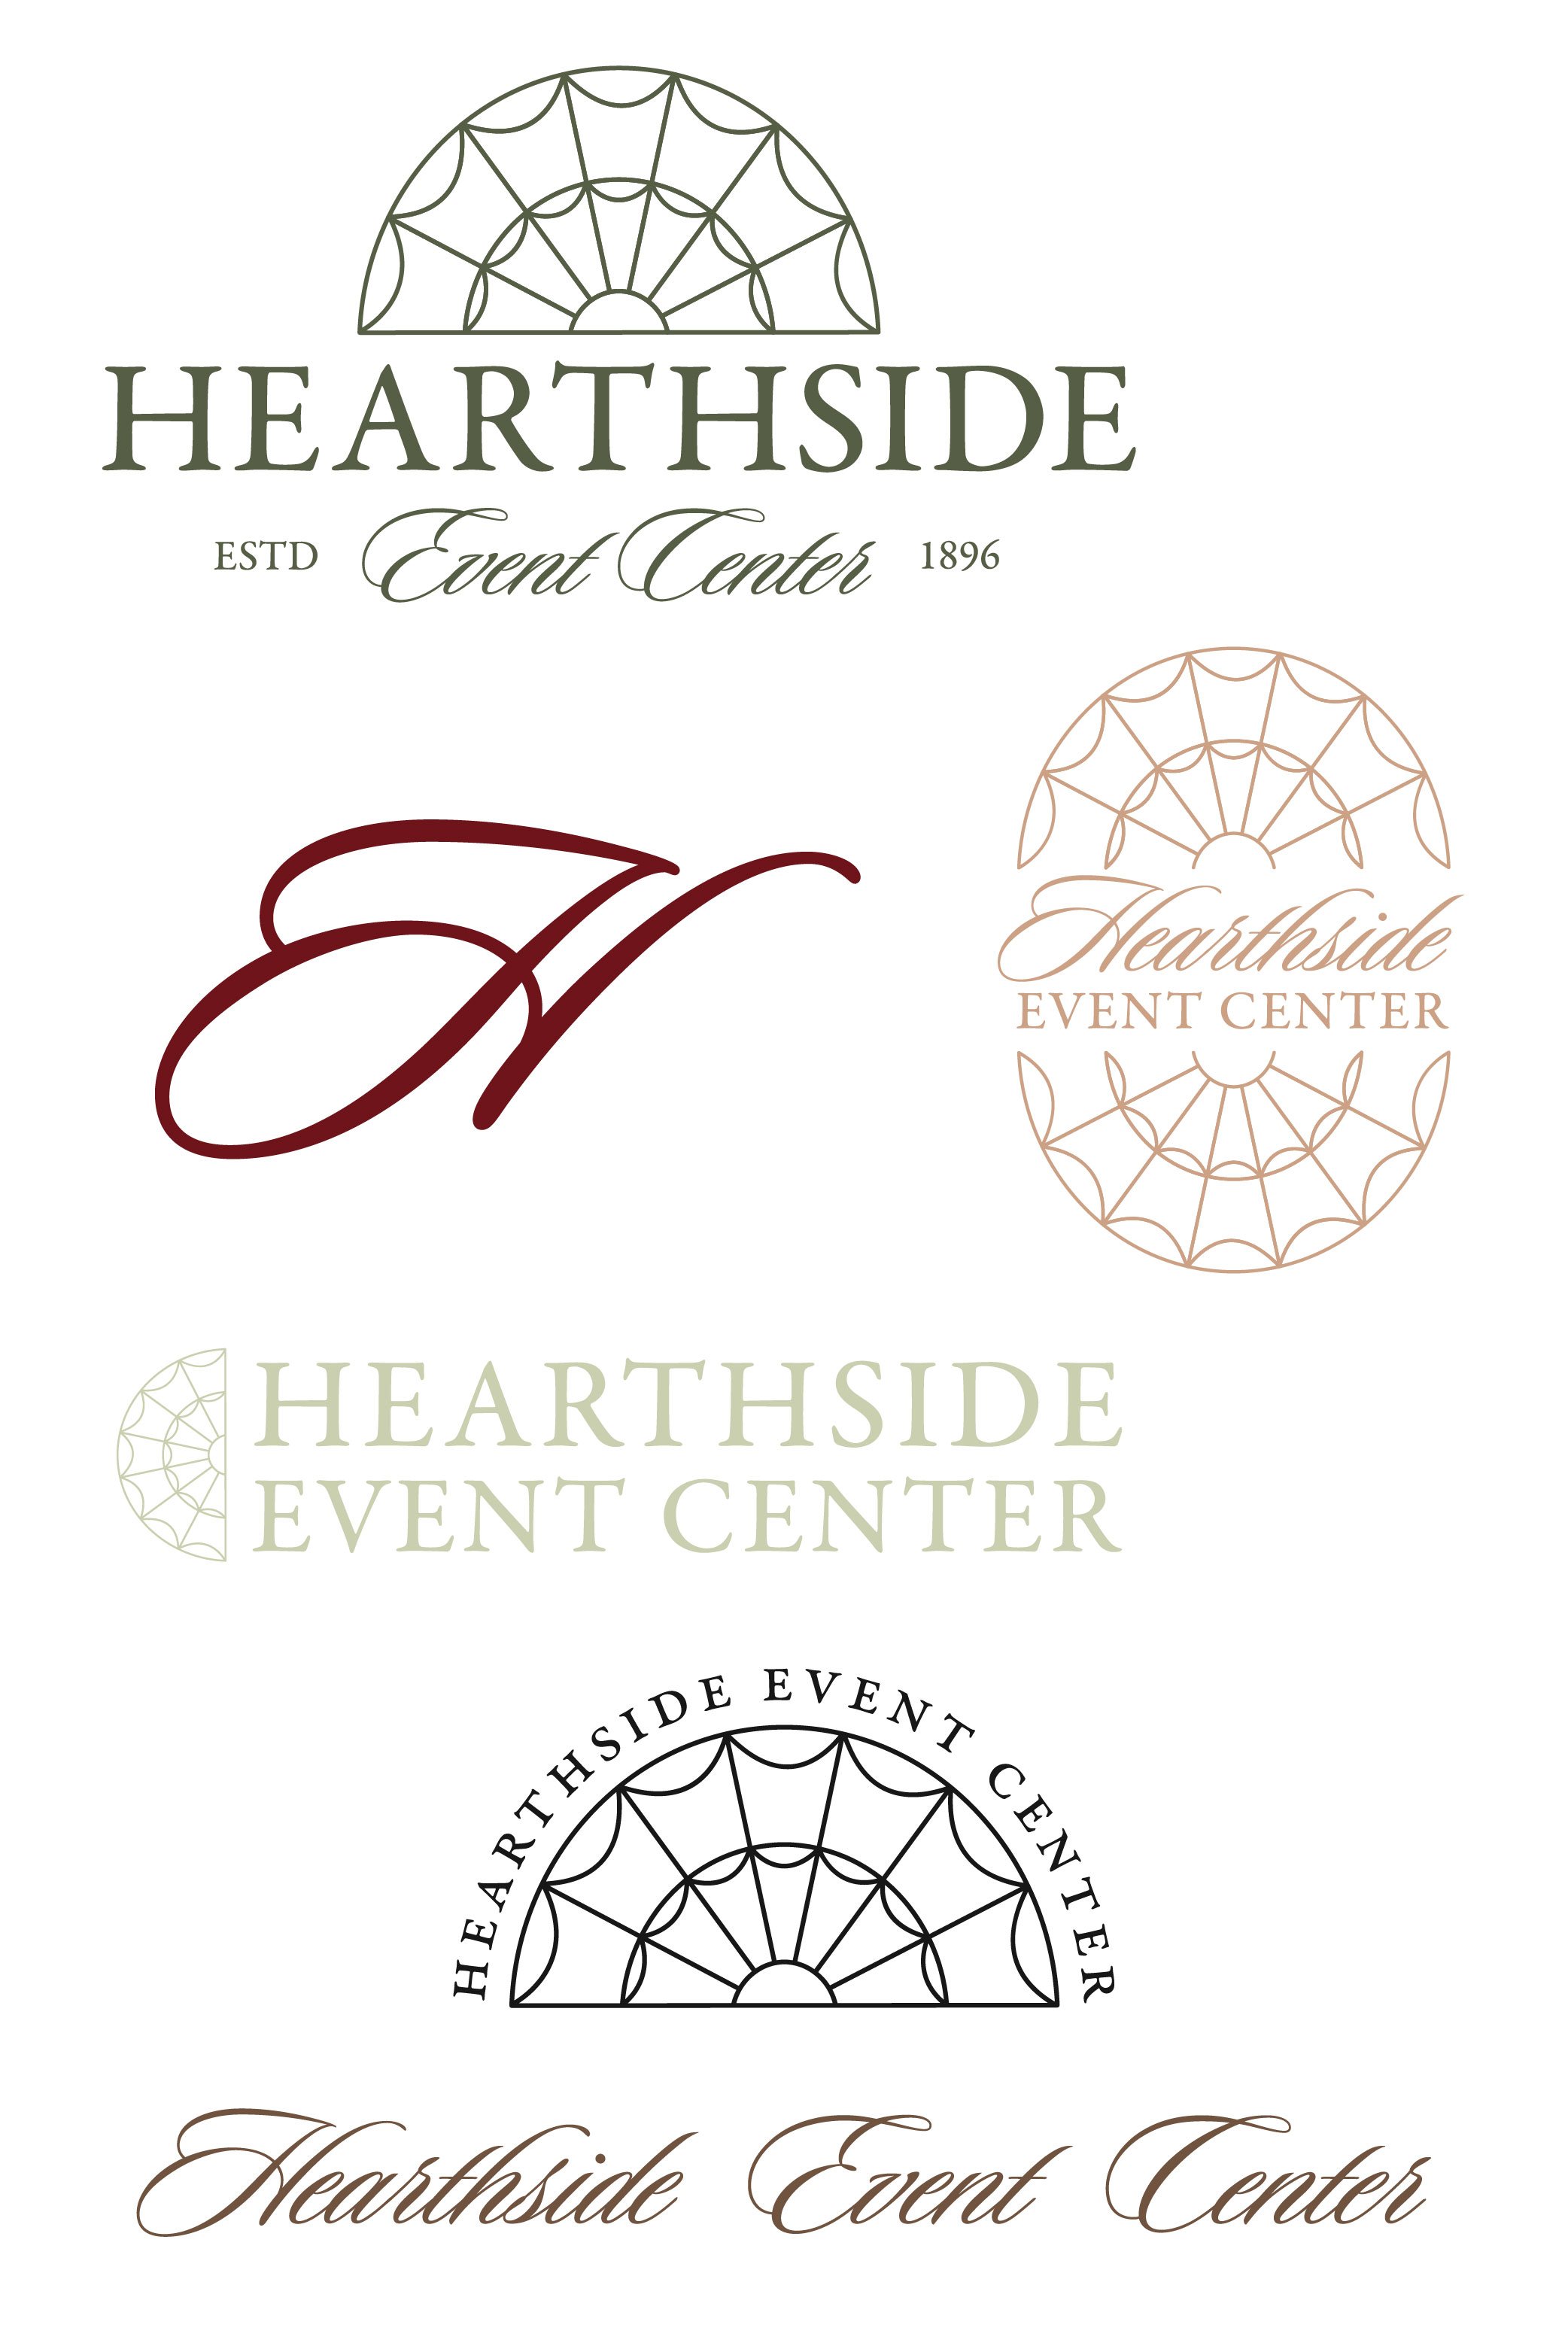  Alternate logos and color options for the Hearthside Event Center in Eden, Utah. #mangumdesignco #graphicdesignservices #montanagraphicdesigner #customlogos #logoandbranddesign #brandingservices #smallbusinessresources #hearthsideeventcenter 